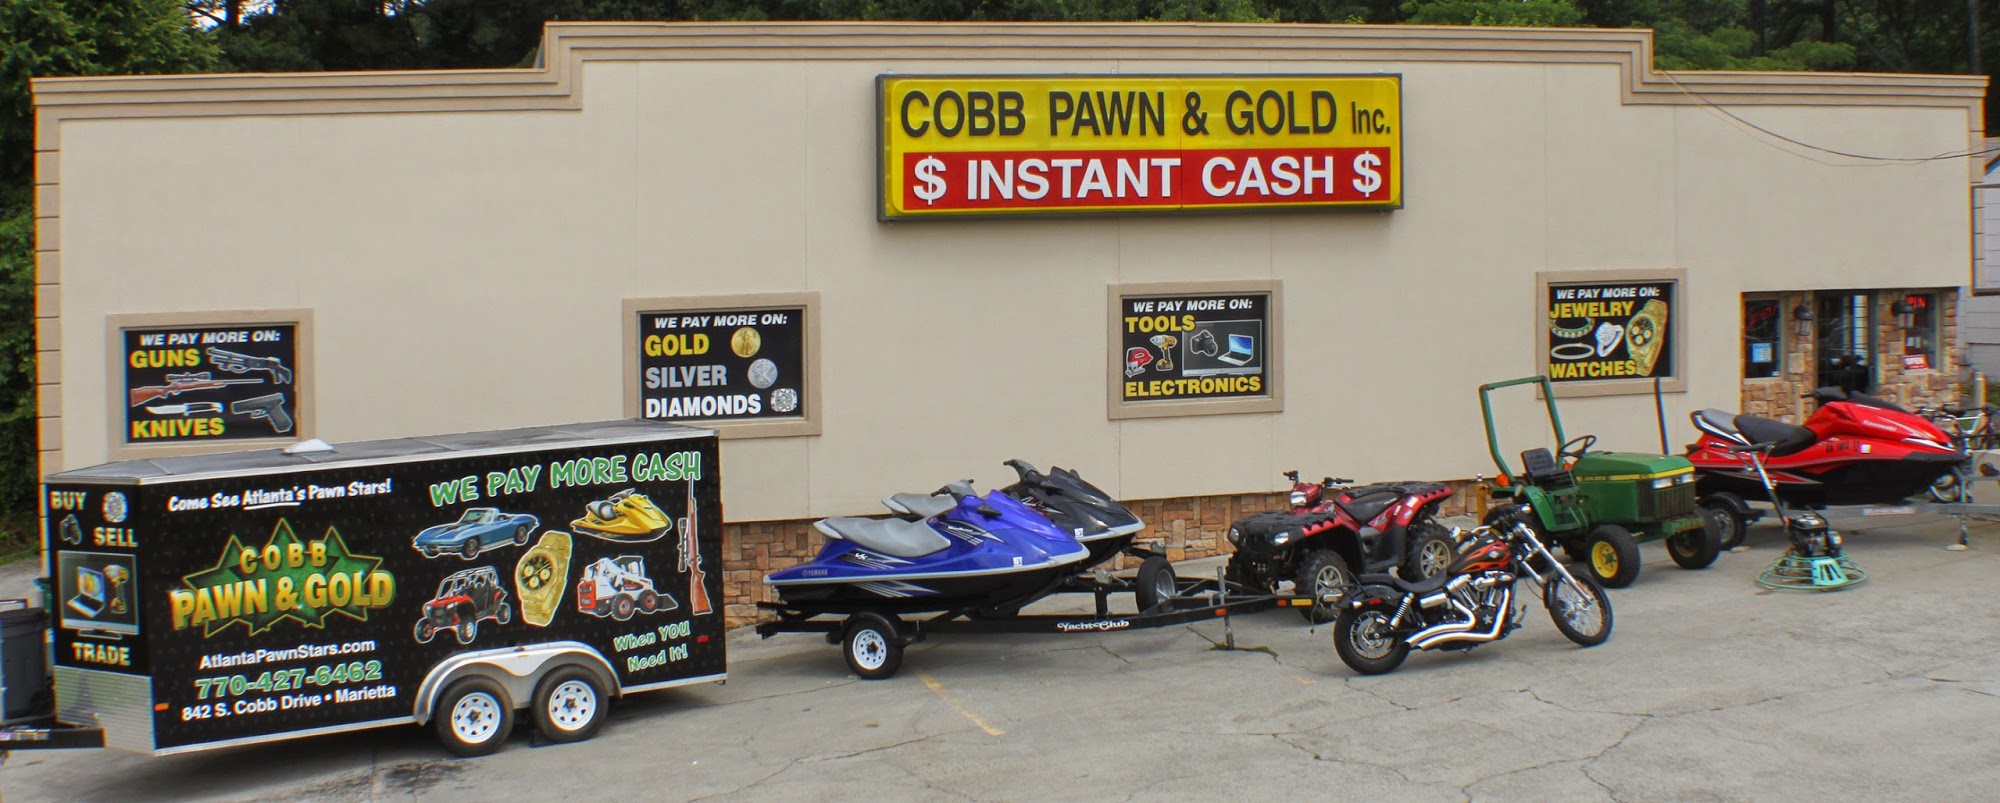 Cobb Pawn & Gold, Inc